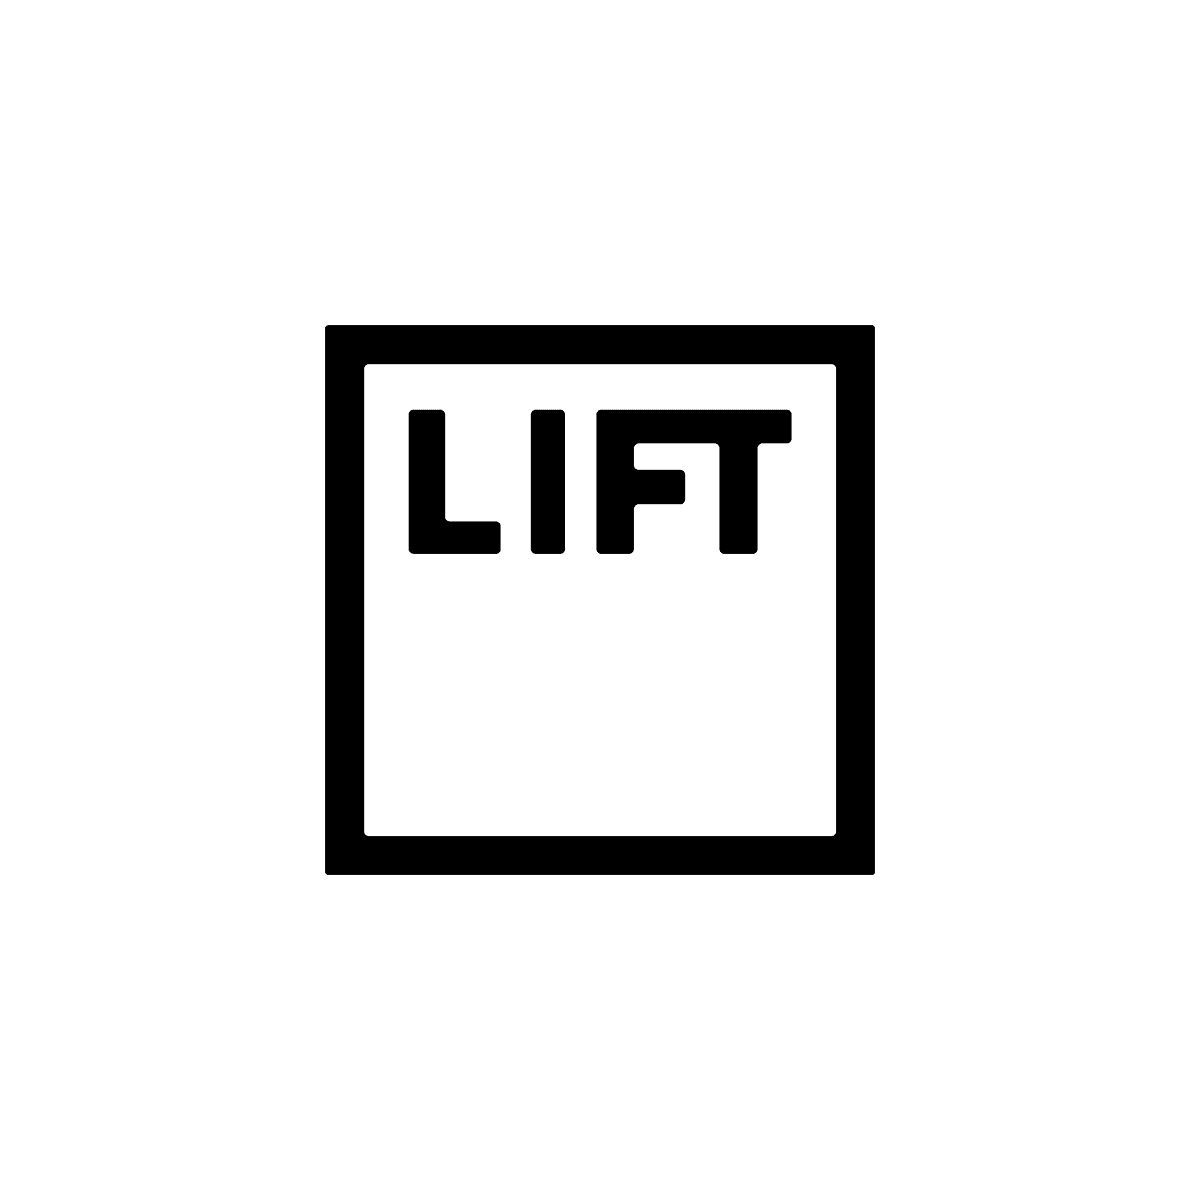 The Lift logo